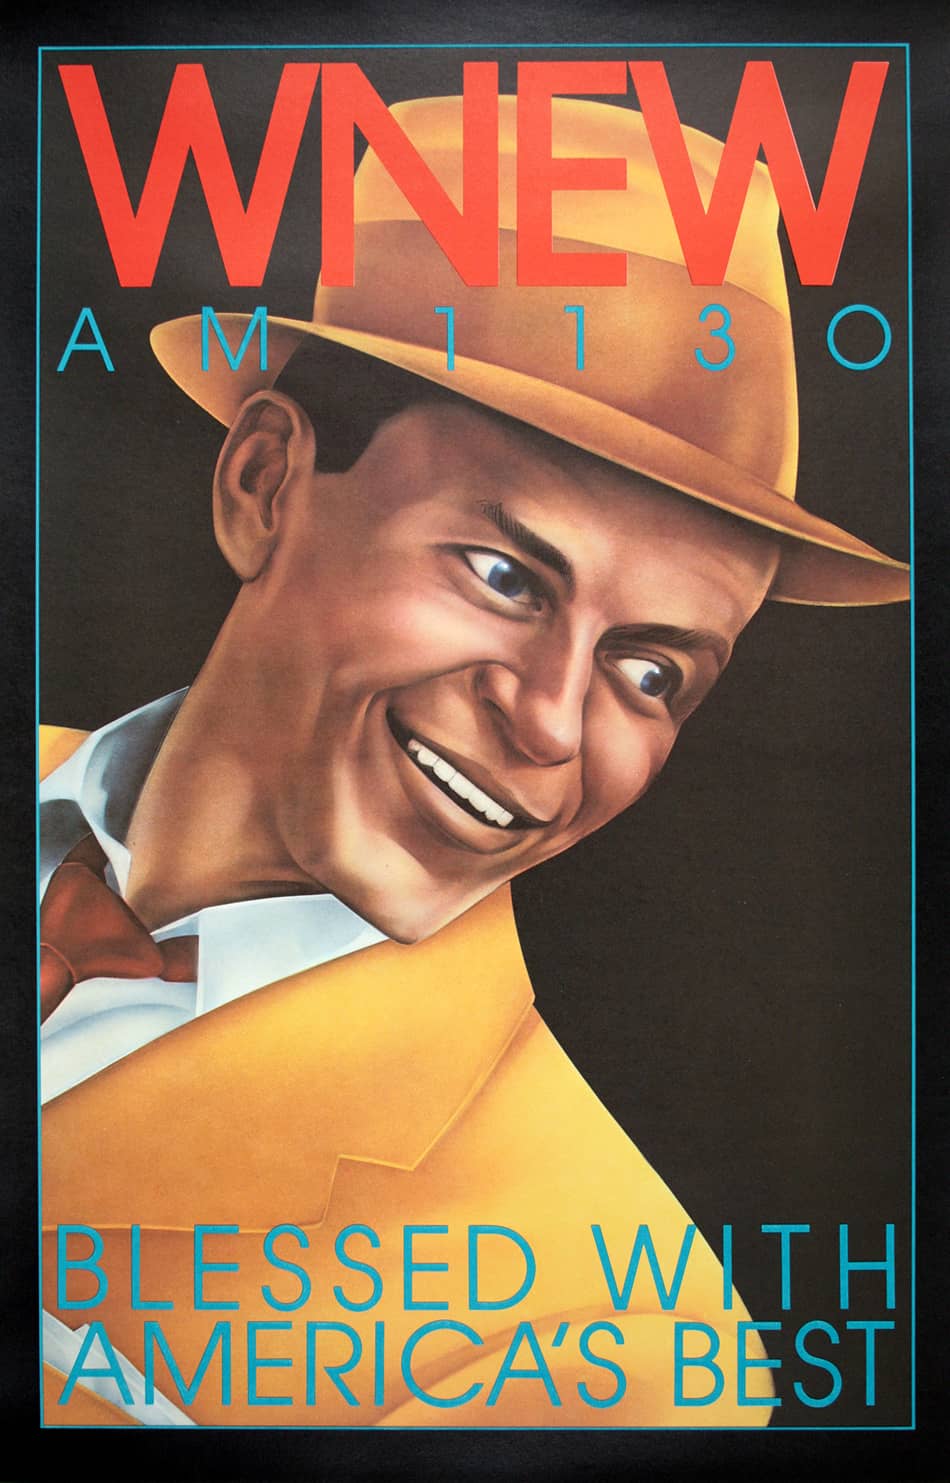 Original Frank Sinatra Jazz Original Vintage Poster for WNEW New York 1973 by Bob Lee Hickson